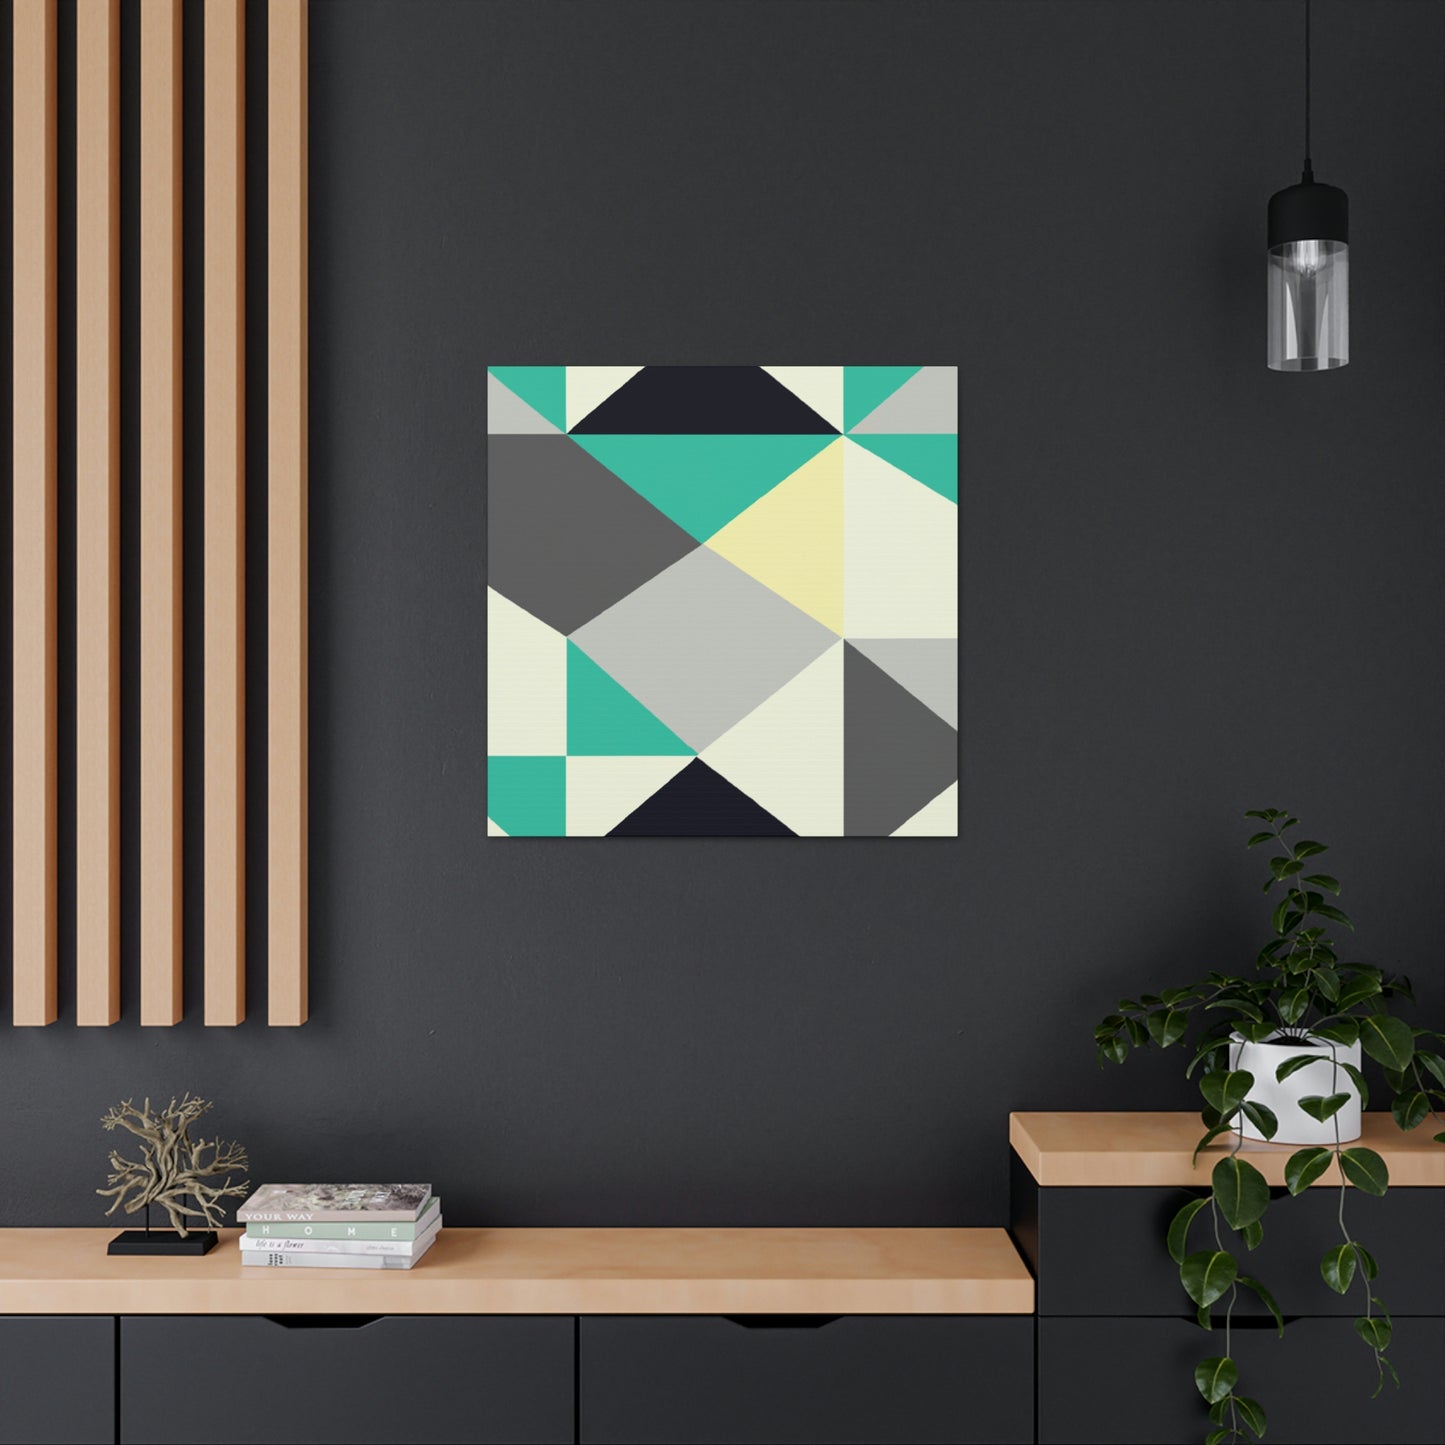 .

Aurora Smithson - Geometric Canvas Wall Art